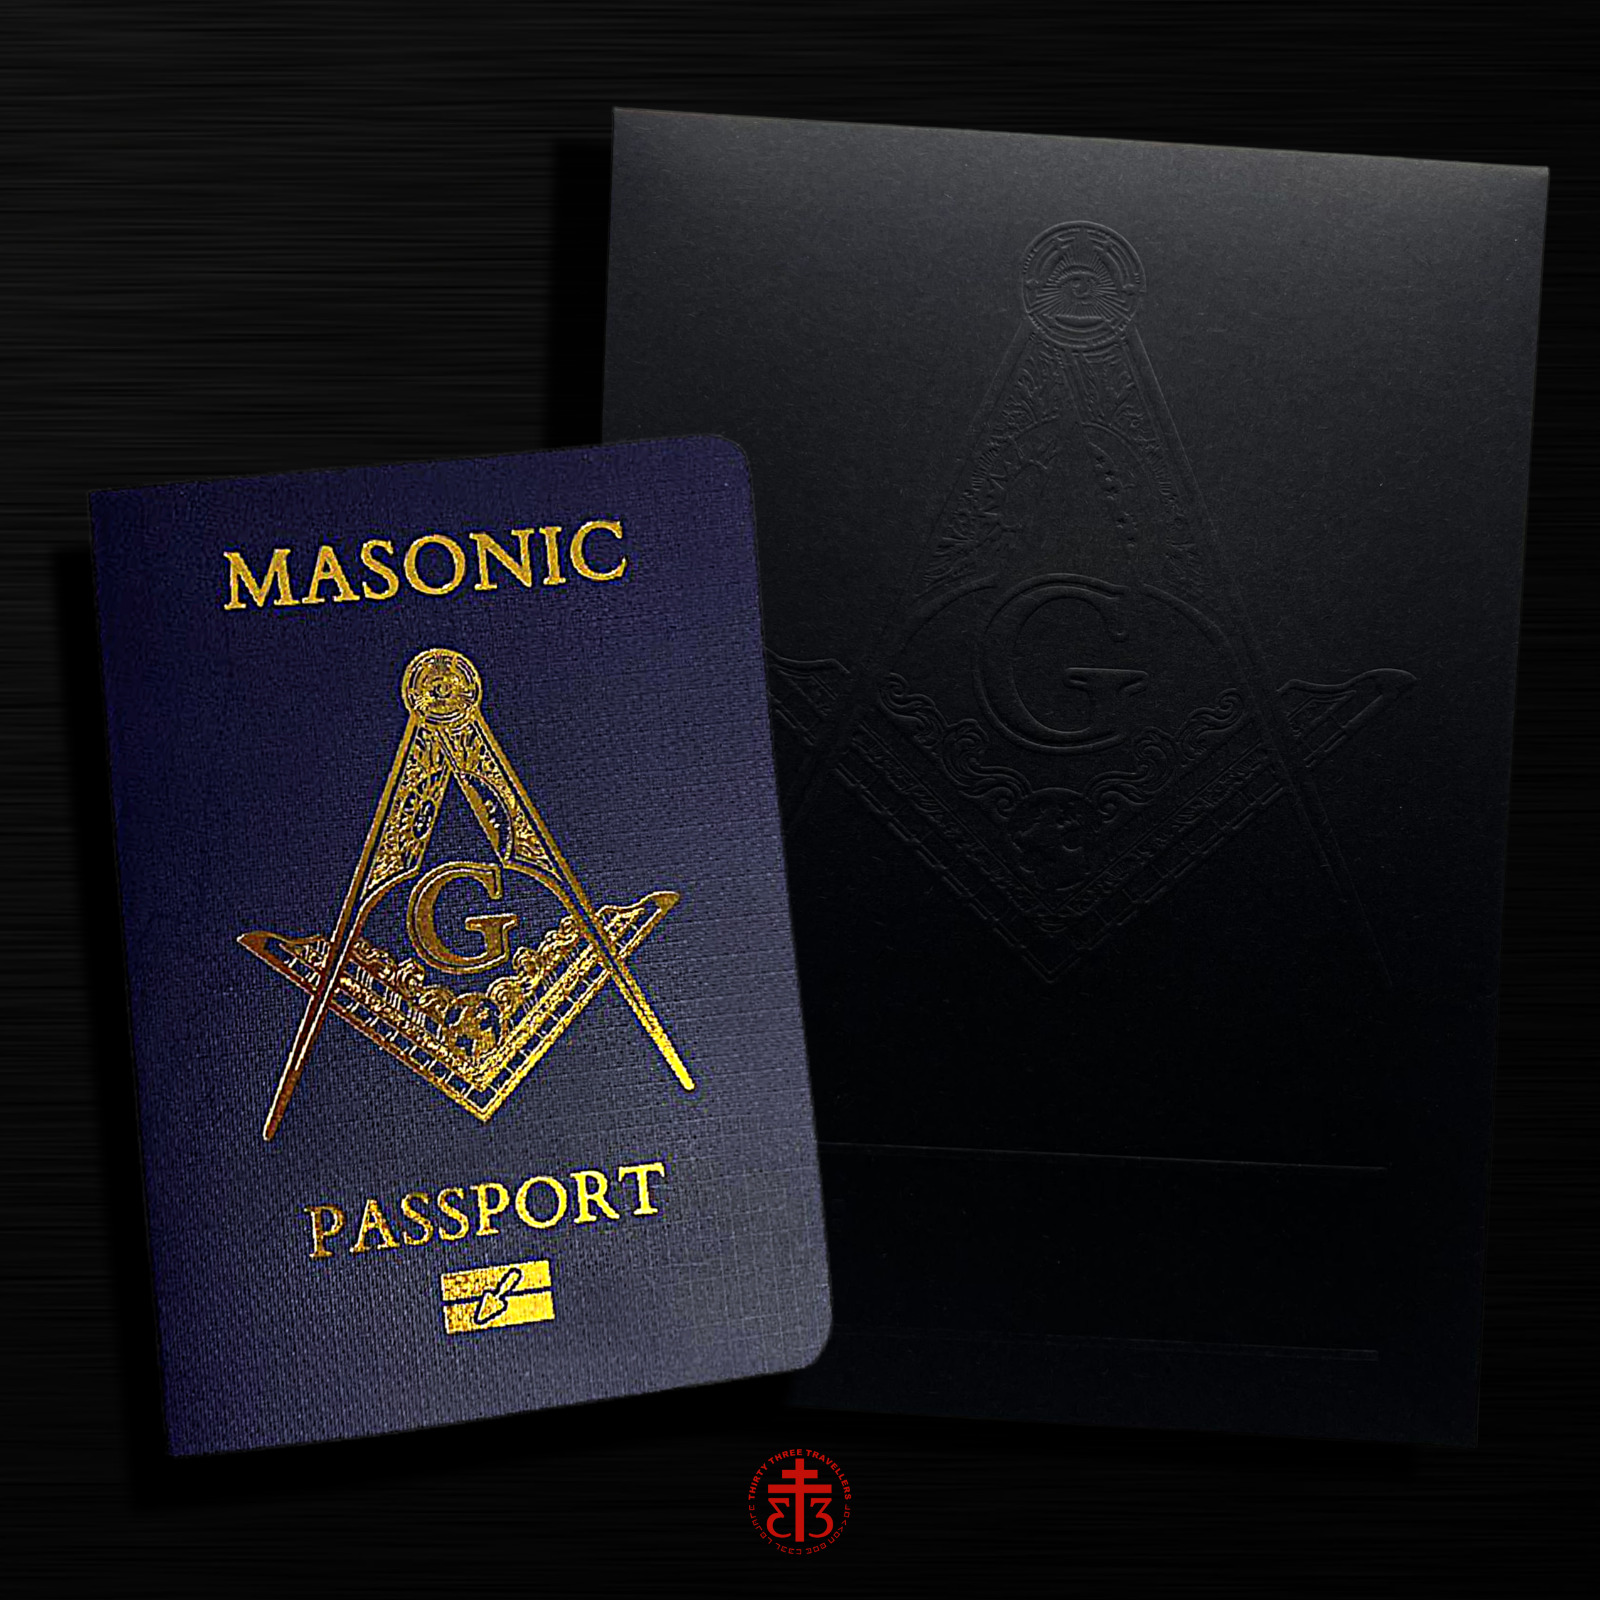 Masonic Passport by 33Travellers